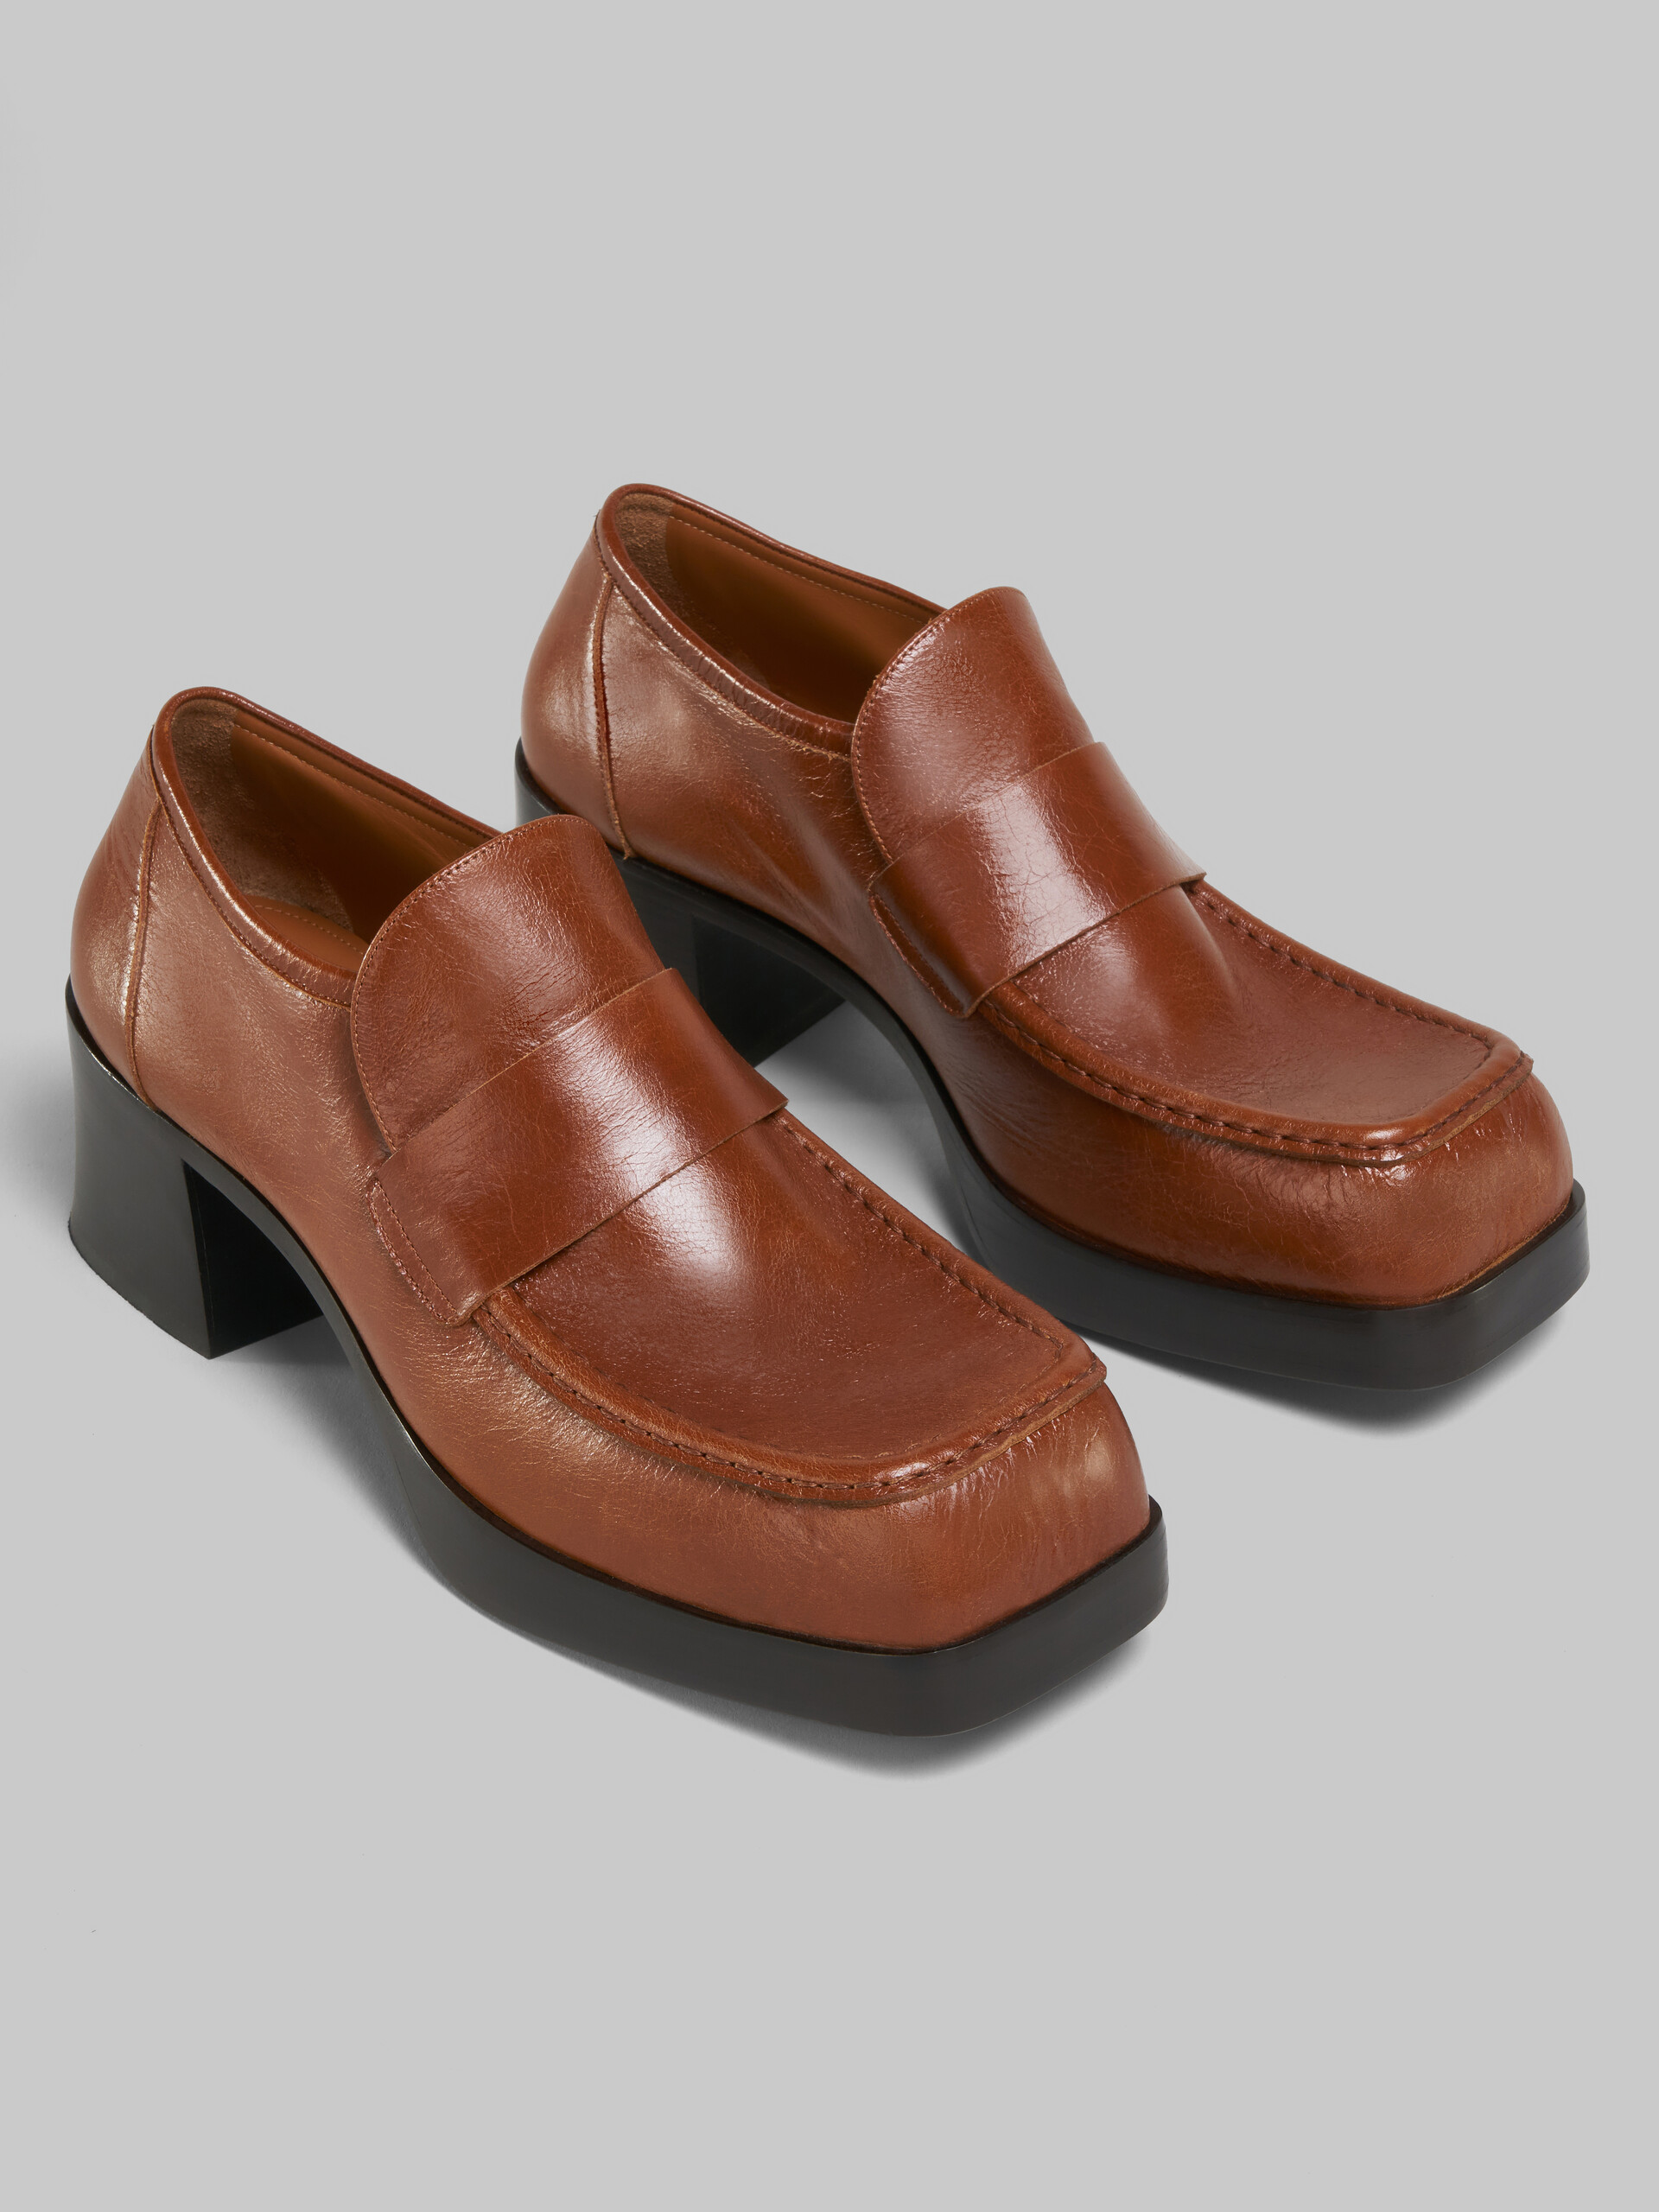 Brown leather heeled loafer - Pumps - Image 5